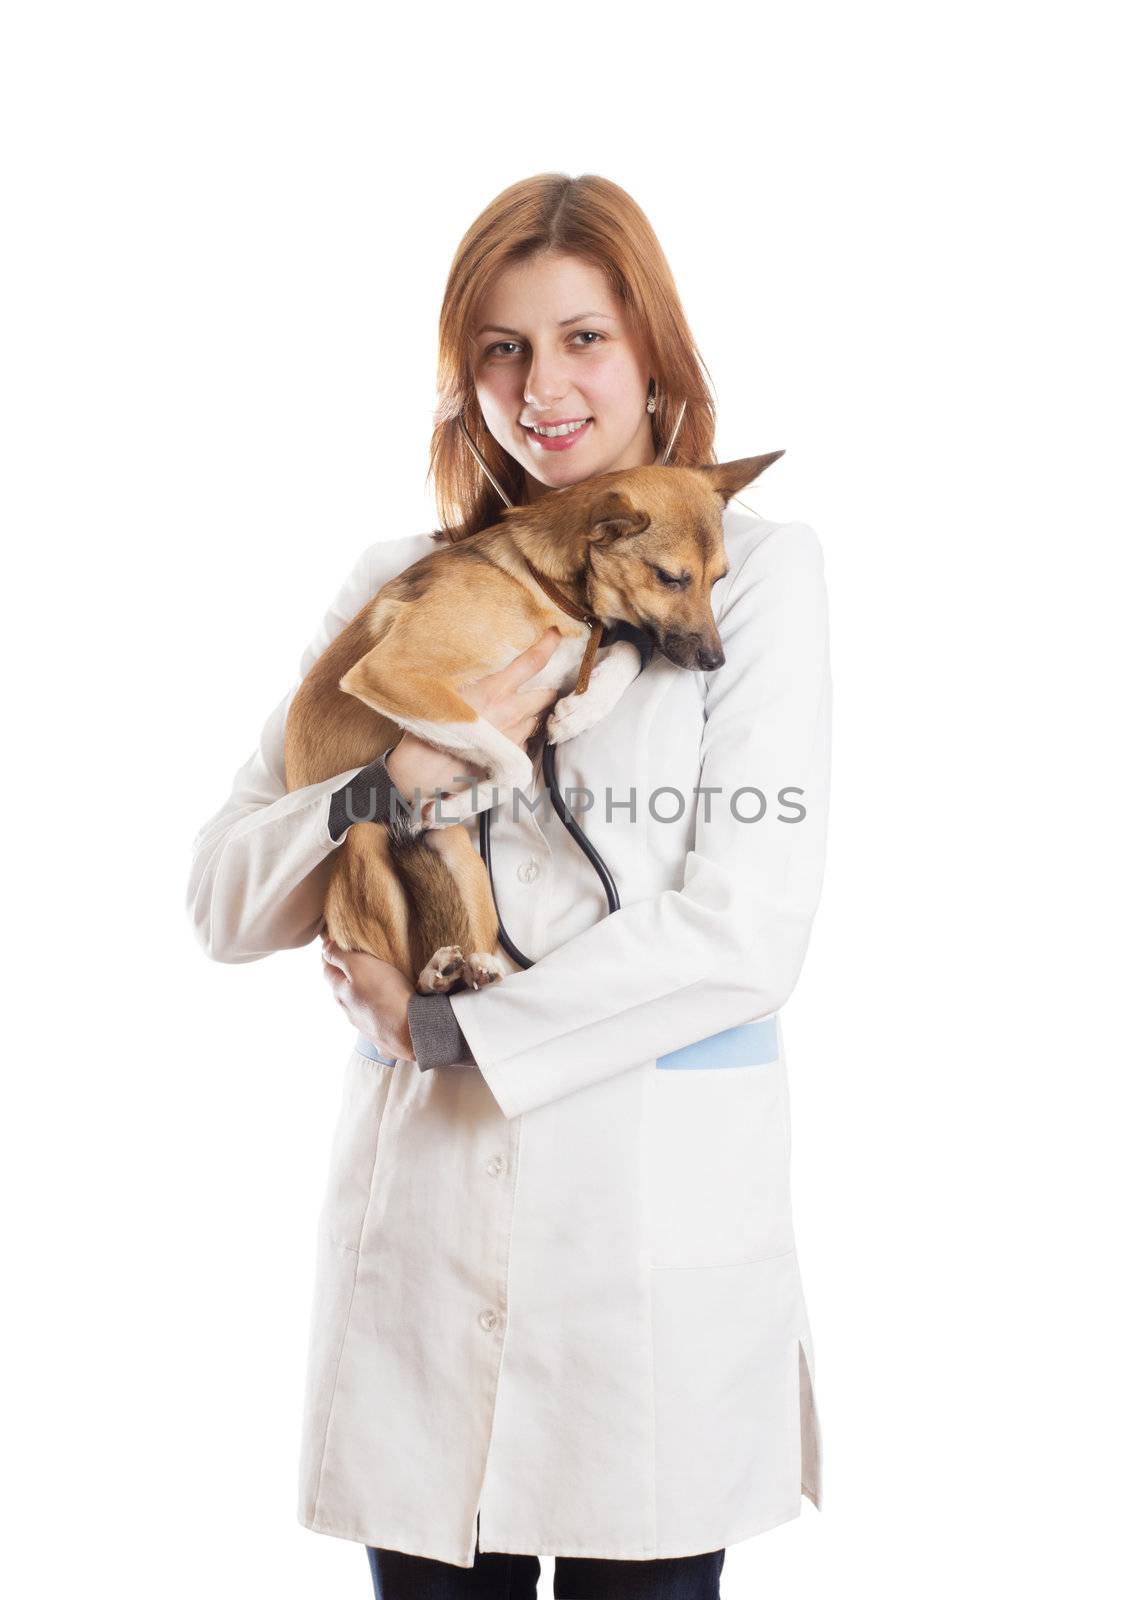 veterinarian woman listening through a stethoscope puppy  by gurin_oleksandr